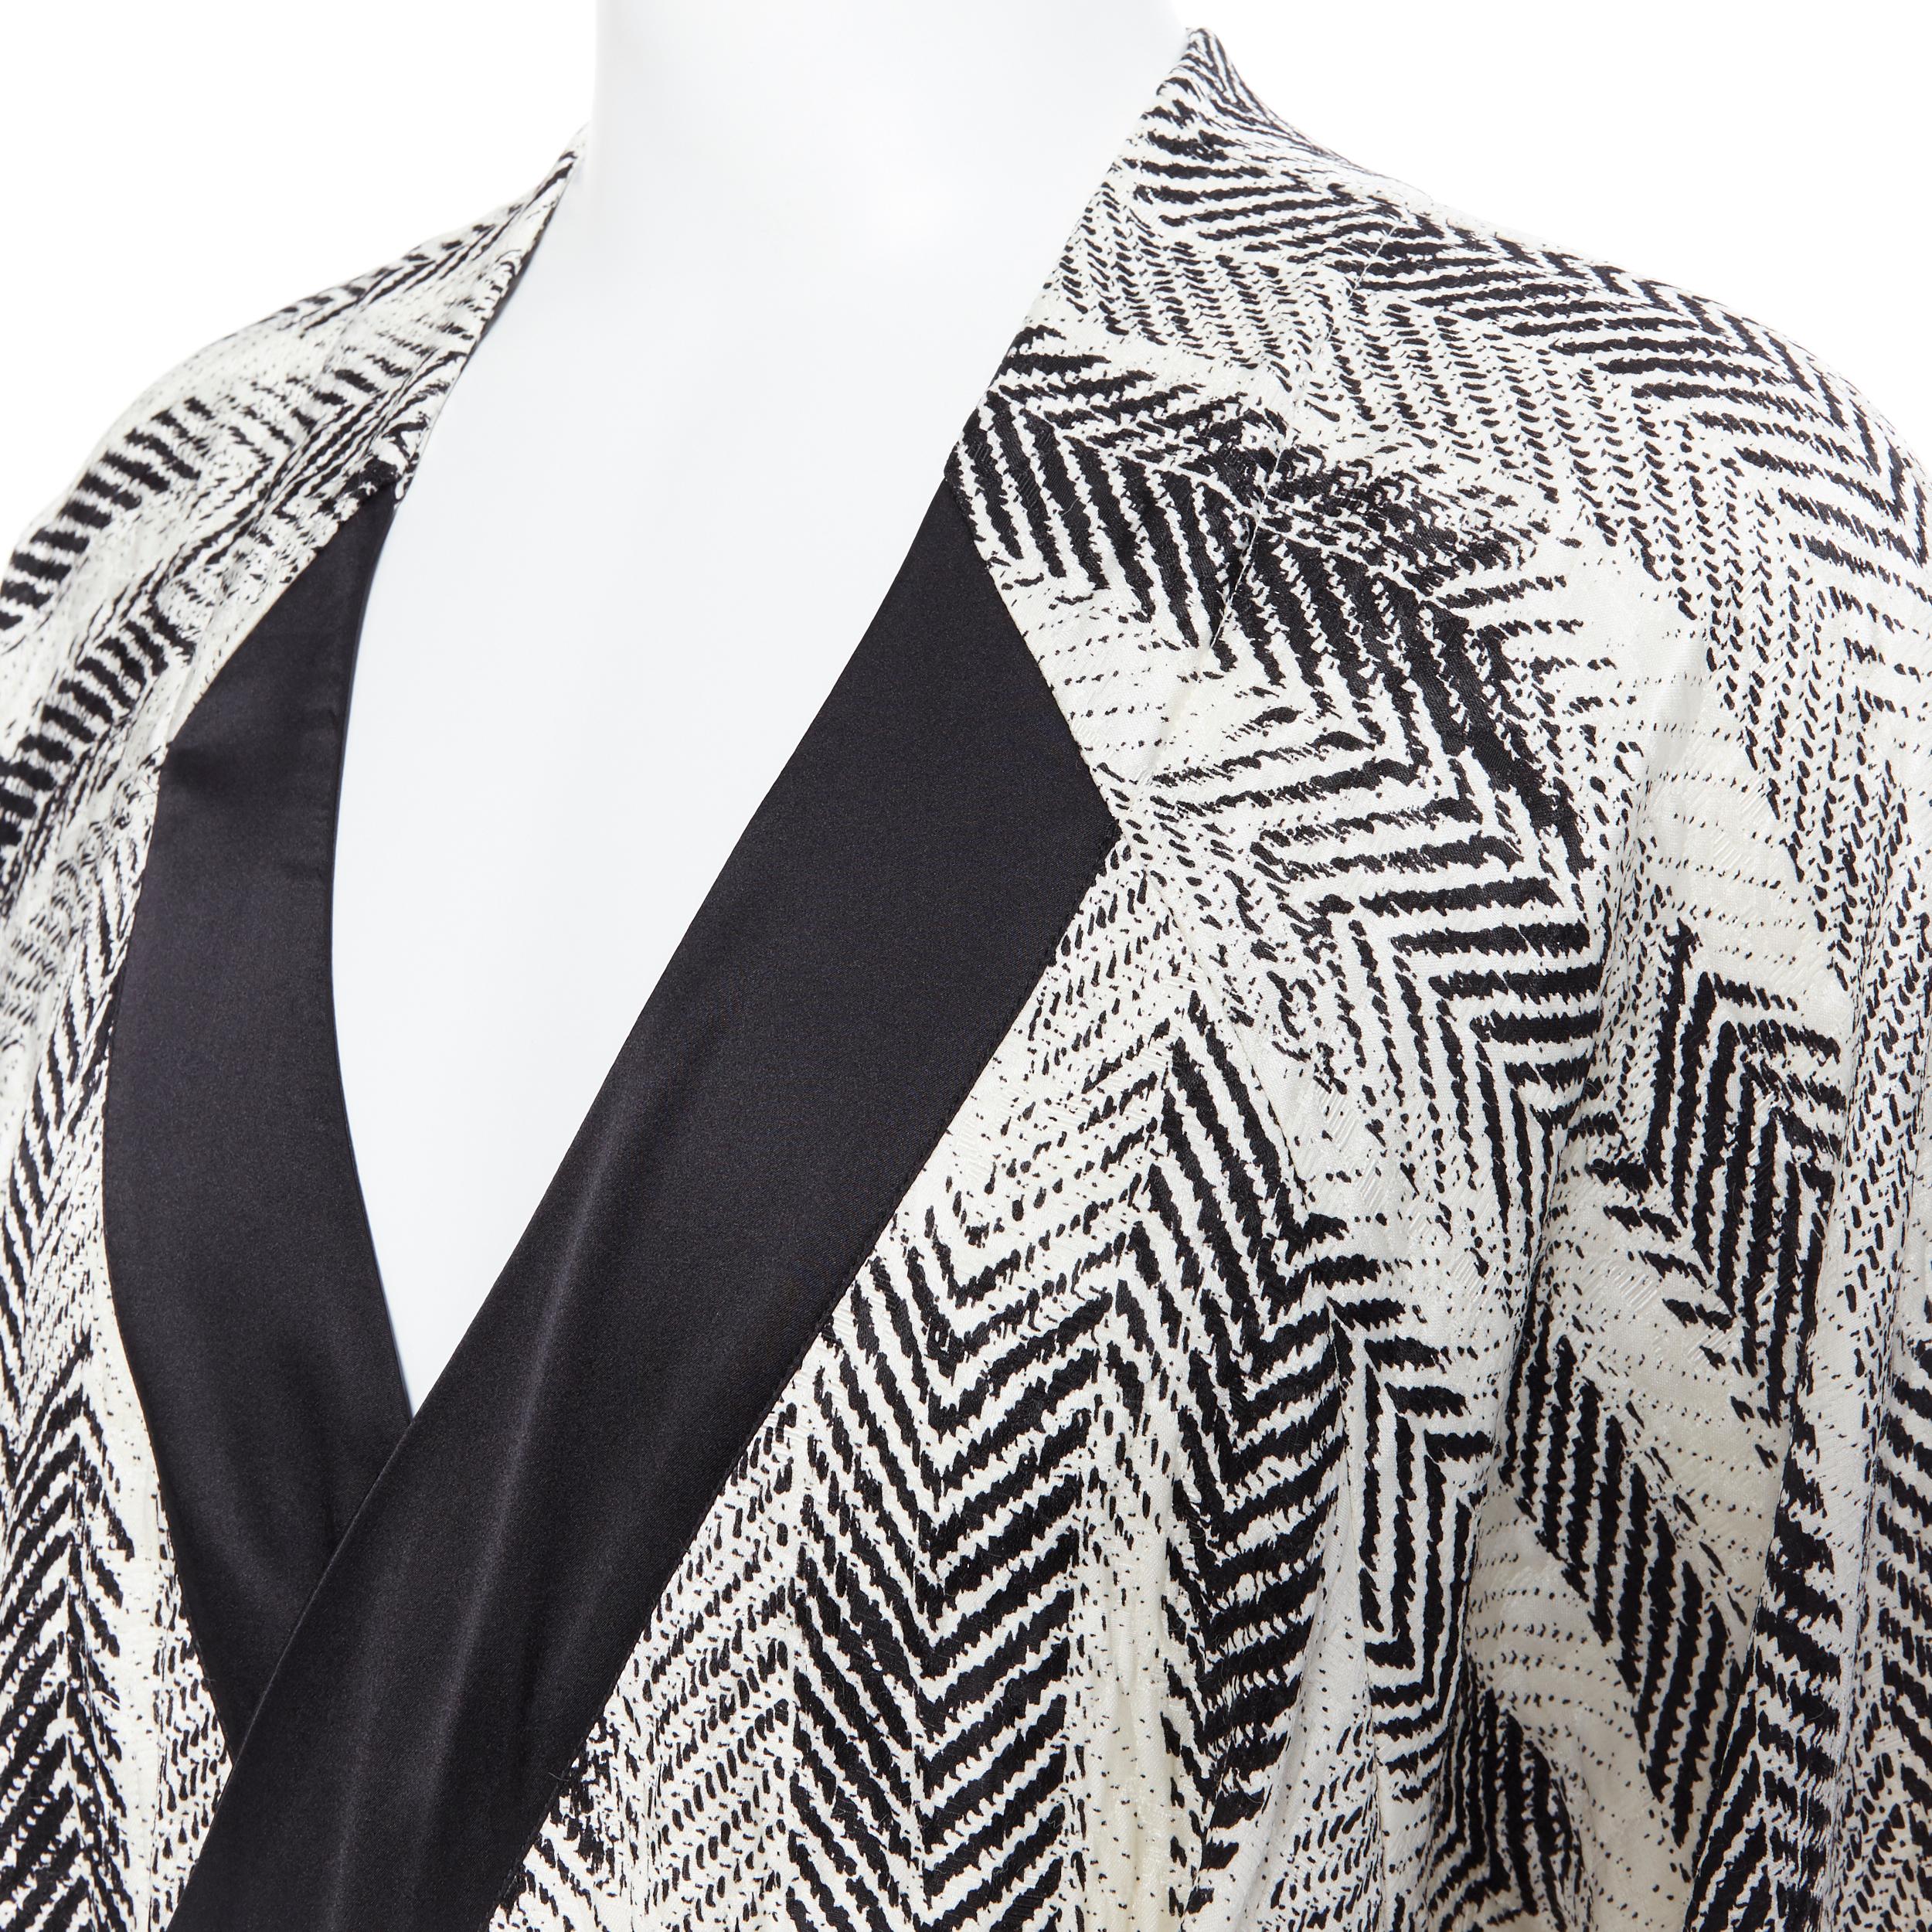 new LA PERLA MENSWEAR Runway black white wool silk jacquard kimono robe coat L
Brand: La Perla
Collection: Spring Summer 2015
Model Name / Style: Evening robe
Material: Wool, silk
Color: White; black stripe
Pattern: Geometric
Extra Detail: Can be